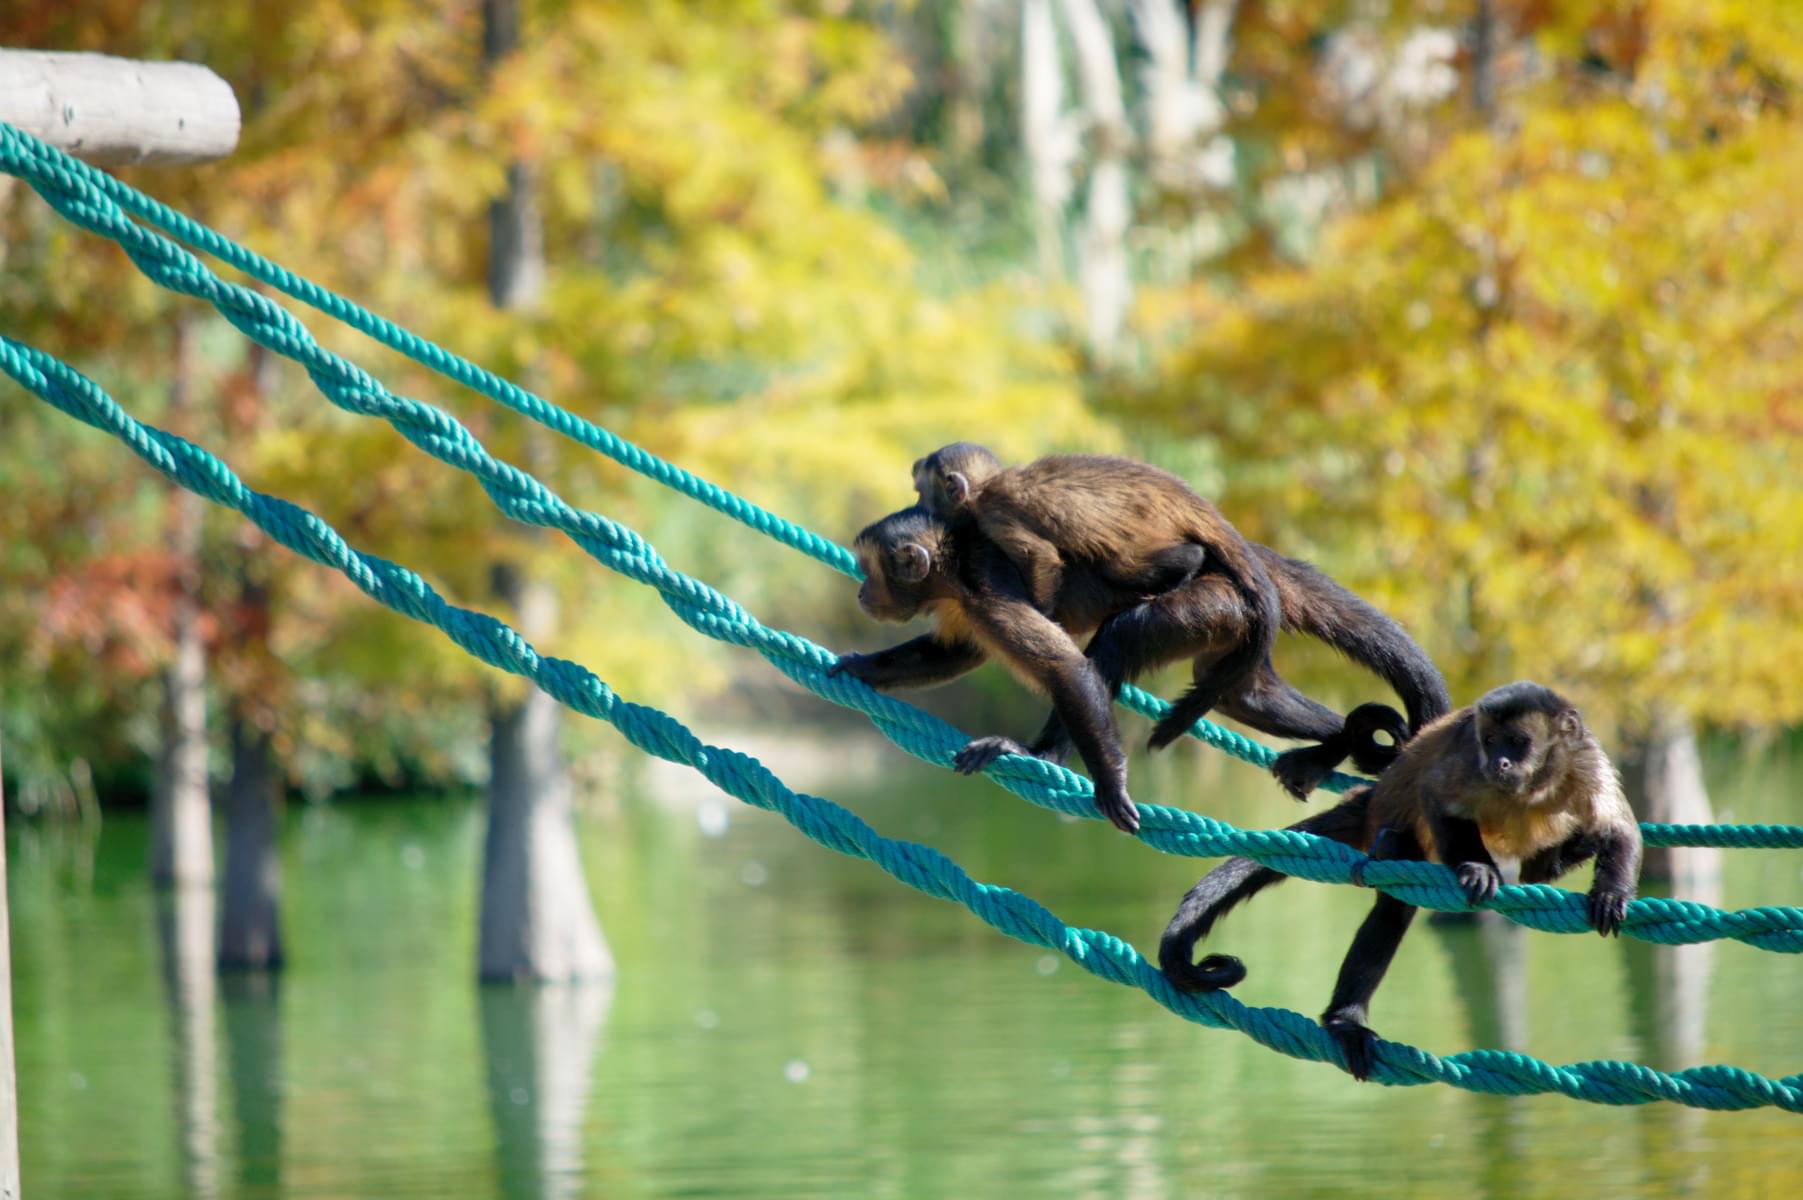 See the cute capuchin monkeys in their habitat